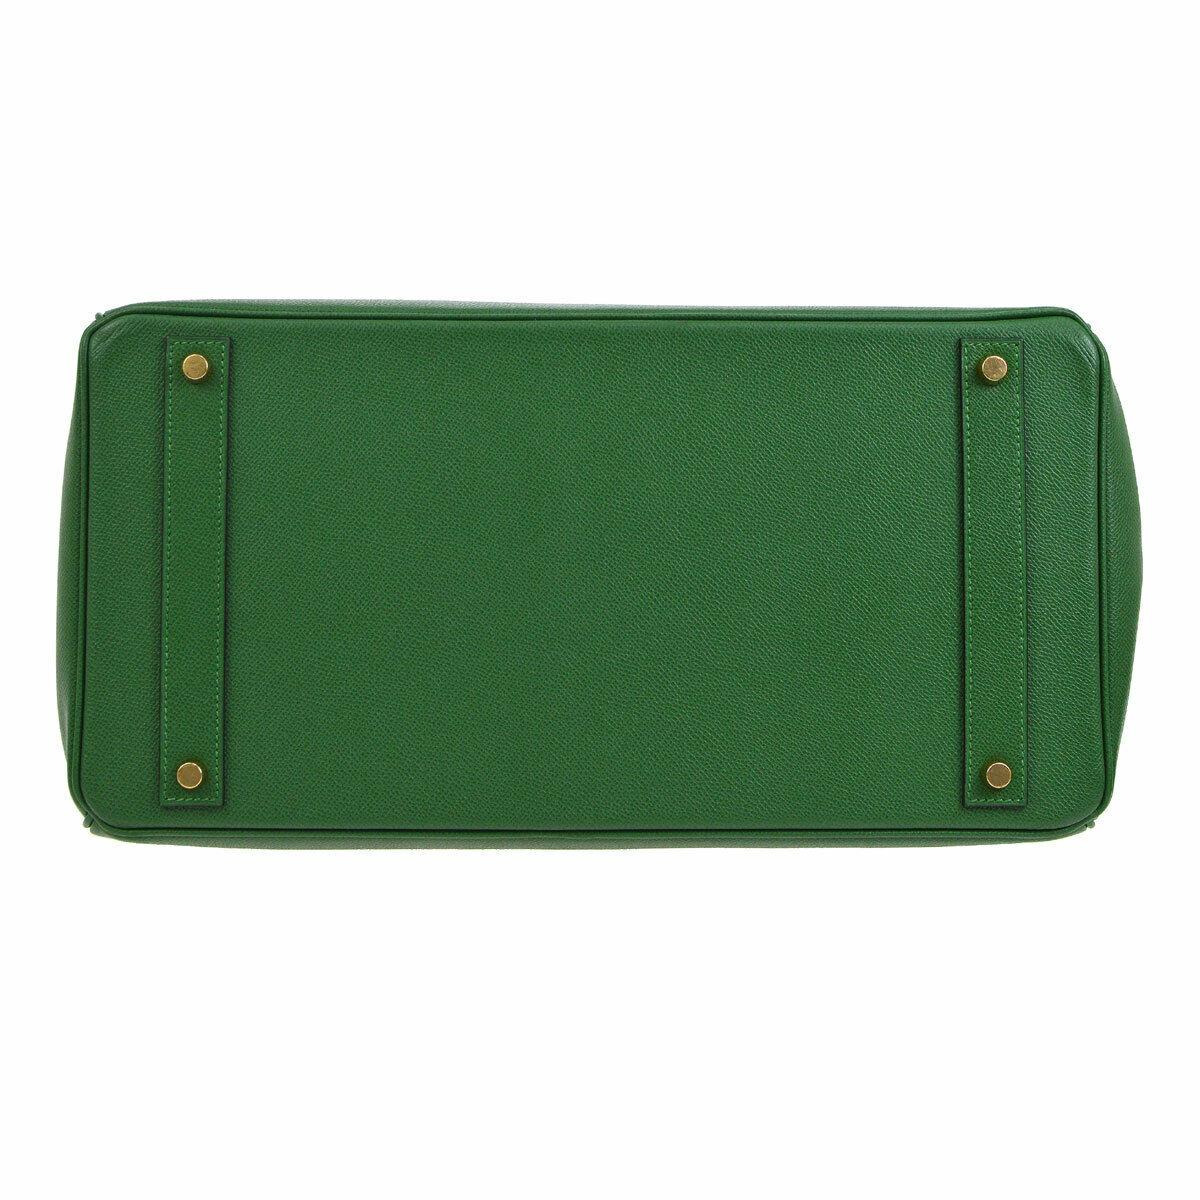 Women's Hermes Birkin 40 Green Leather Gold Carryall Travel Top Handle Satchel Tote Bag